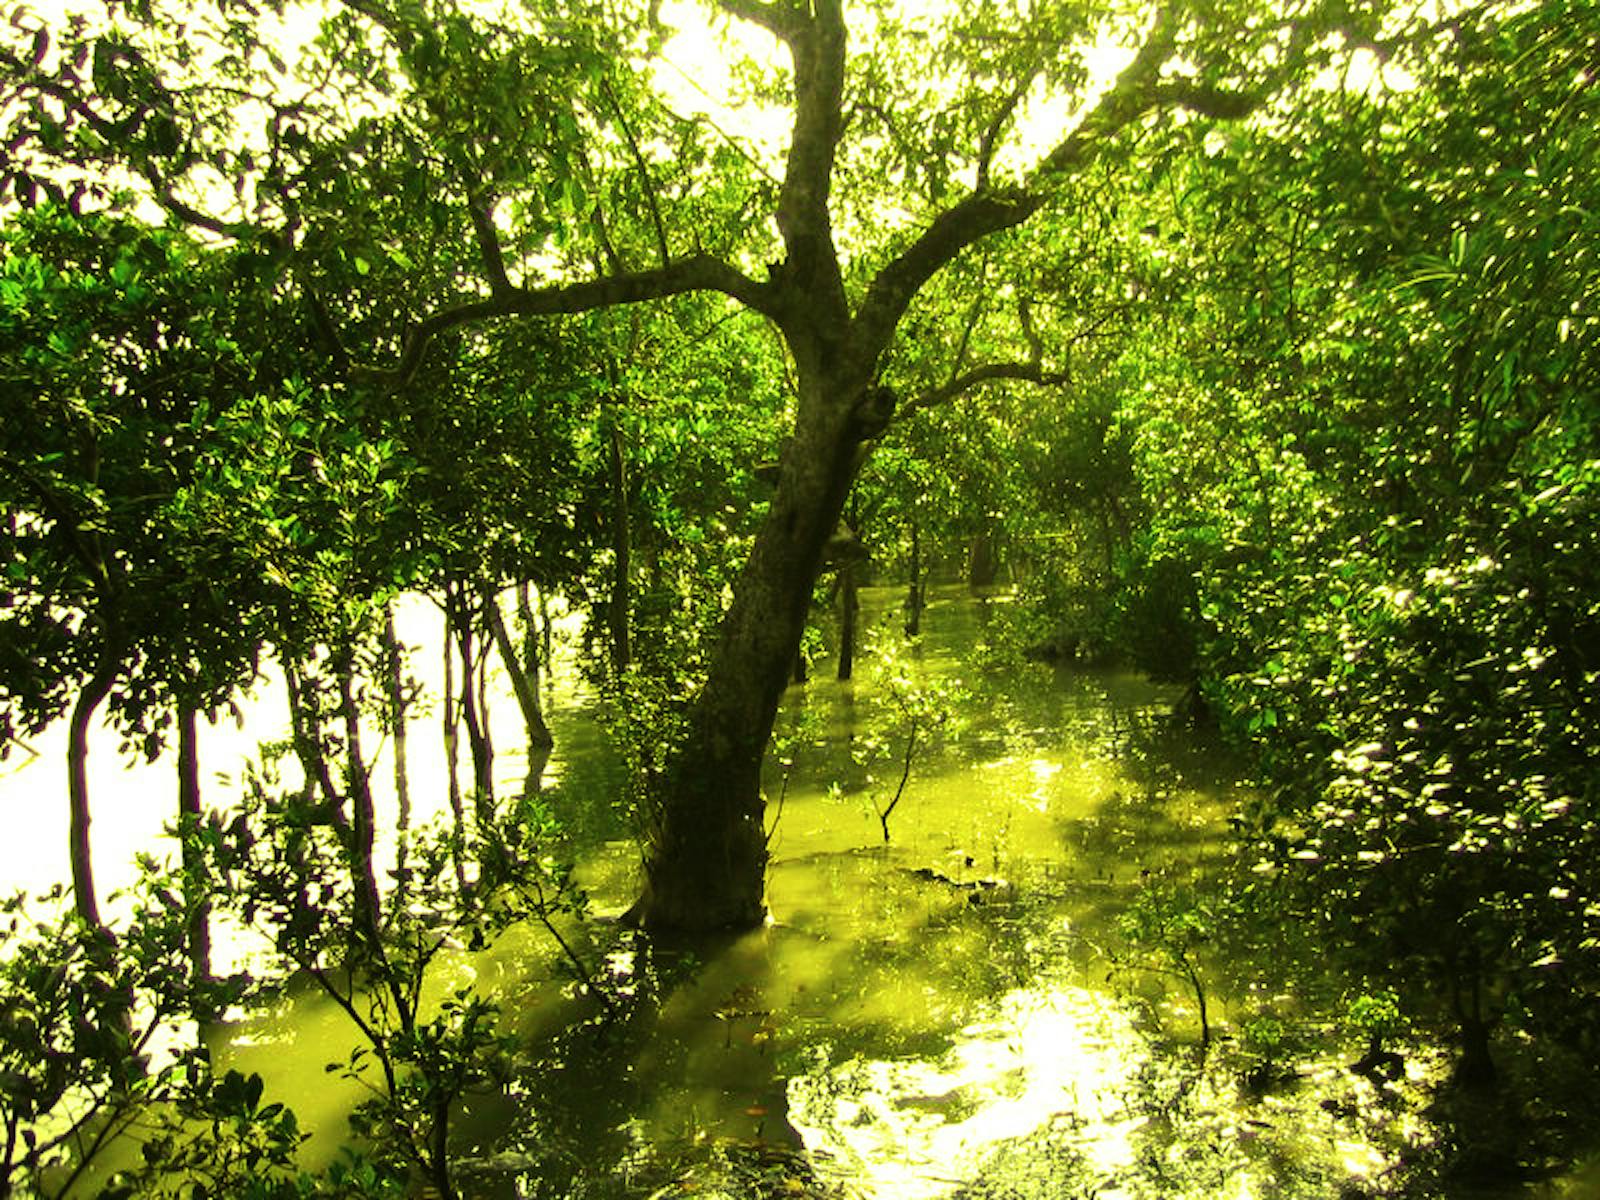 Sundarbans Mangroves